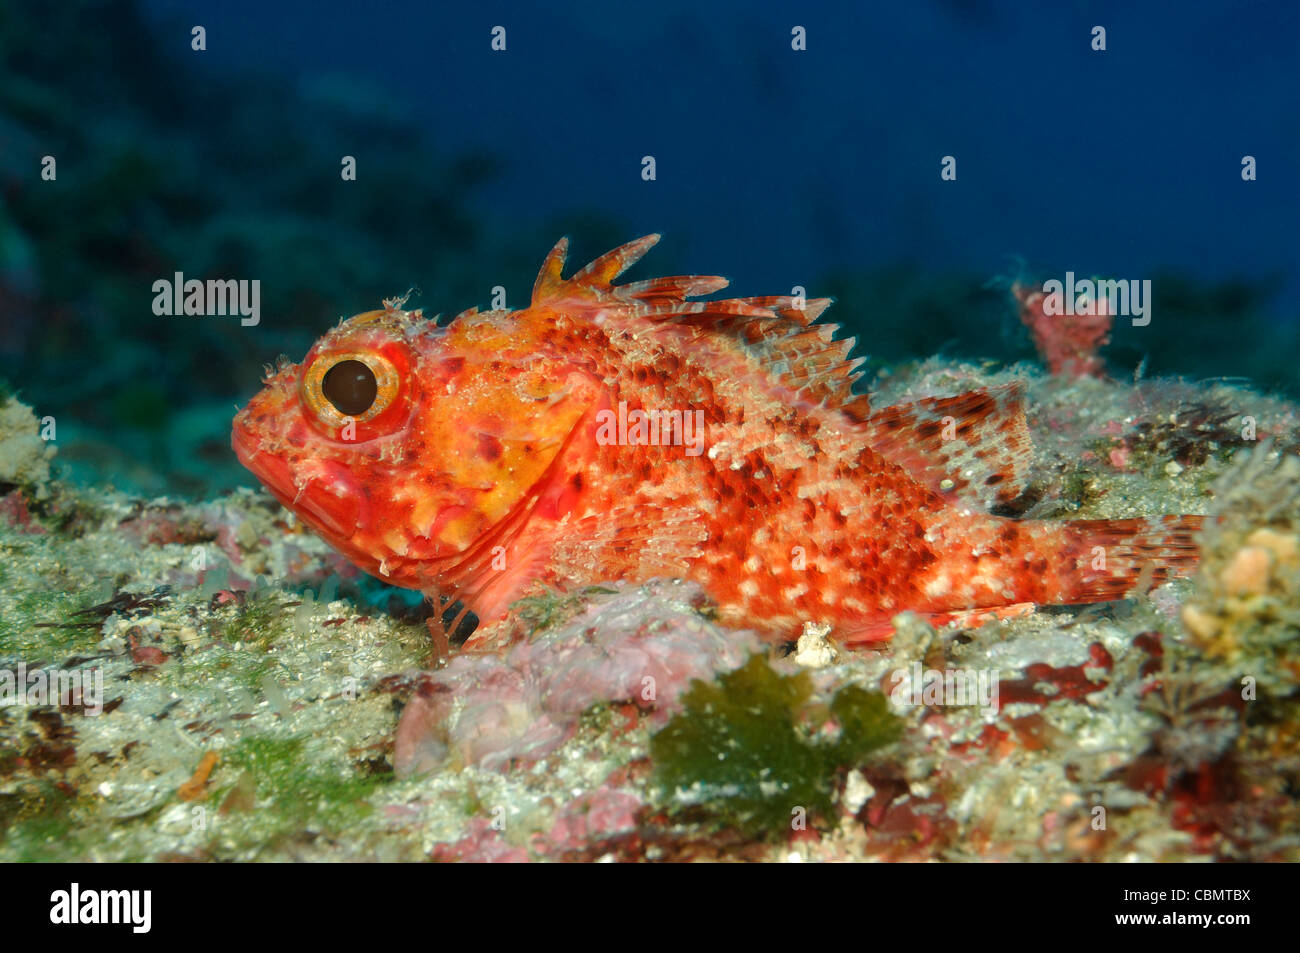 Small Rockfish, Scorpaena notata, Korcula Island, Adriatic Sea, Croatia Stock Photo